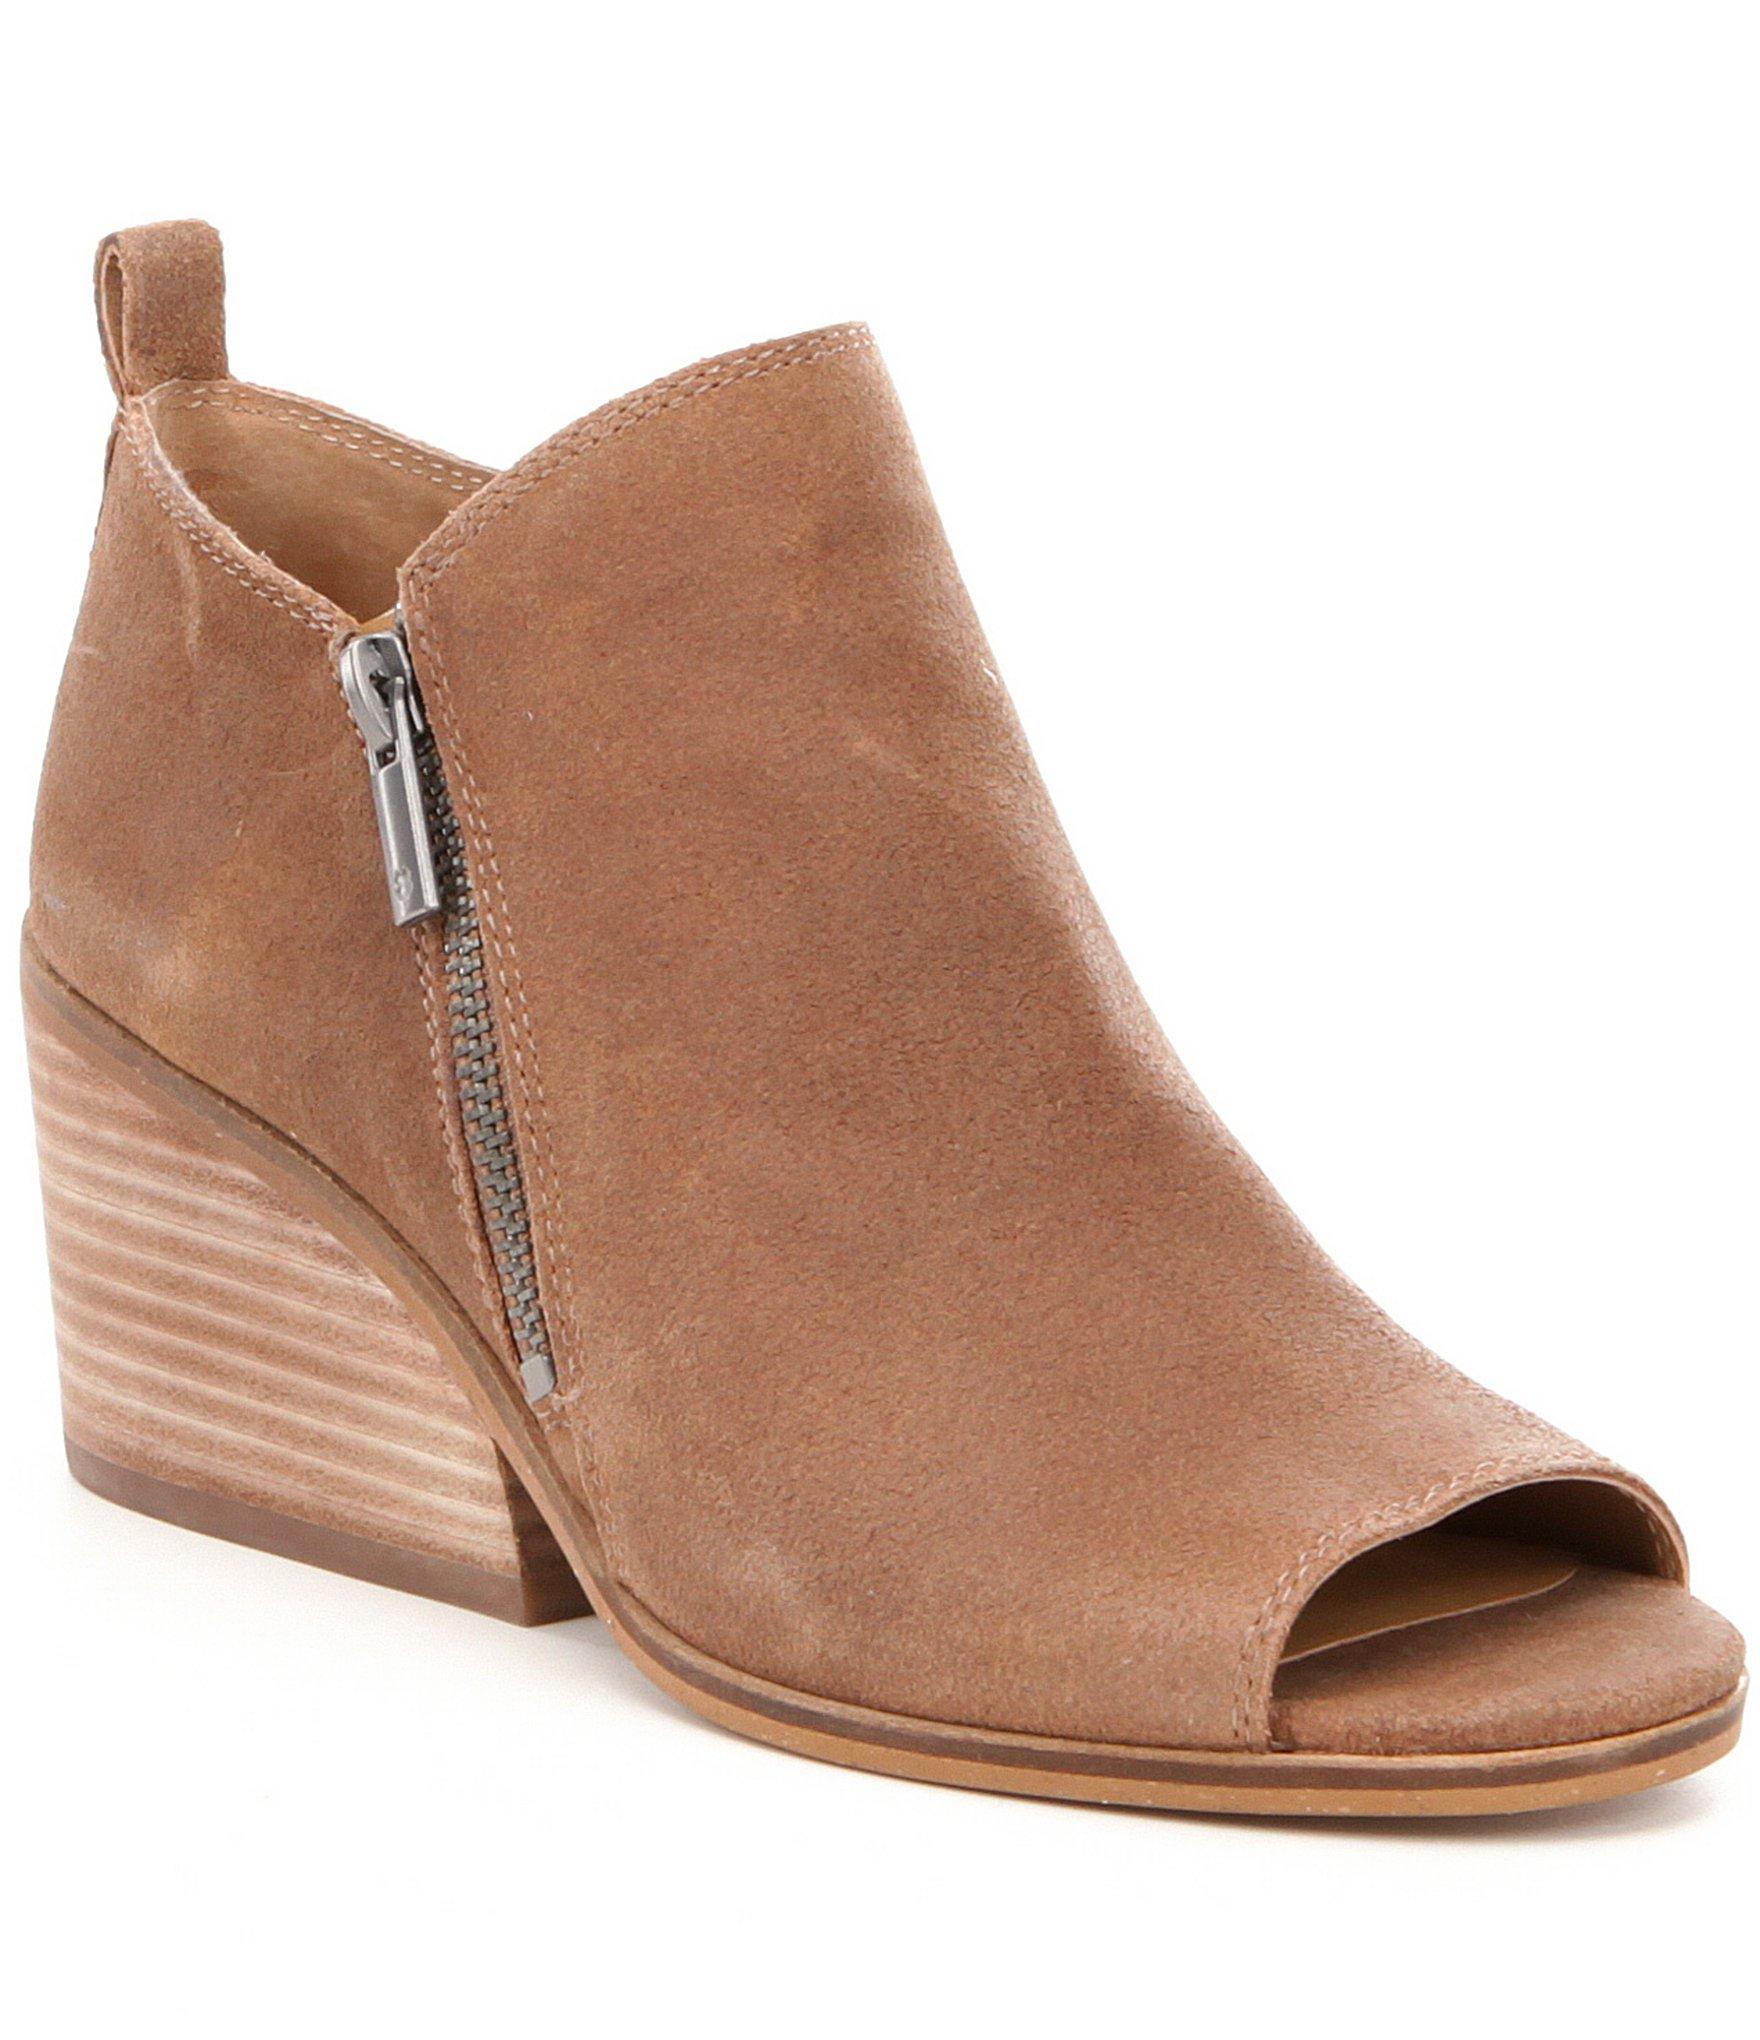 Lucky Brand Sinzeria Leather Peep-toe Stacked Heel Shooties in Brown - Lyst